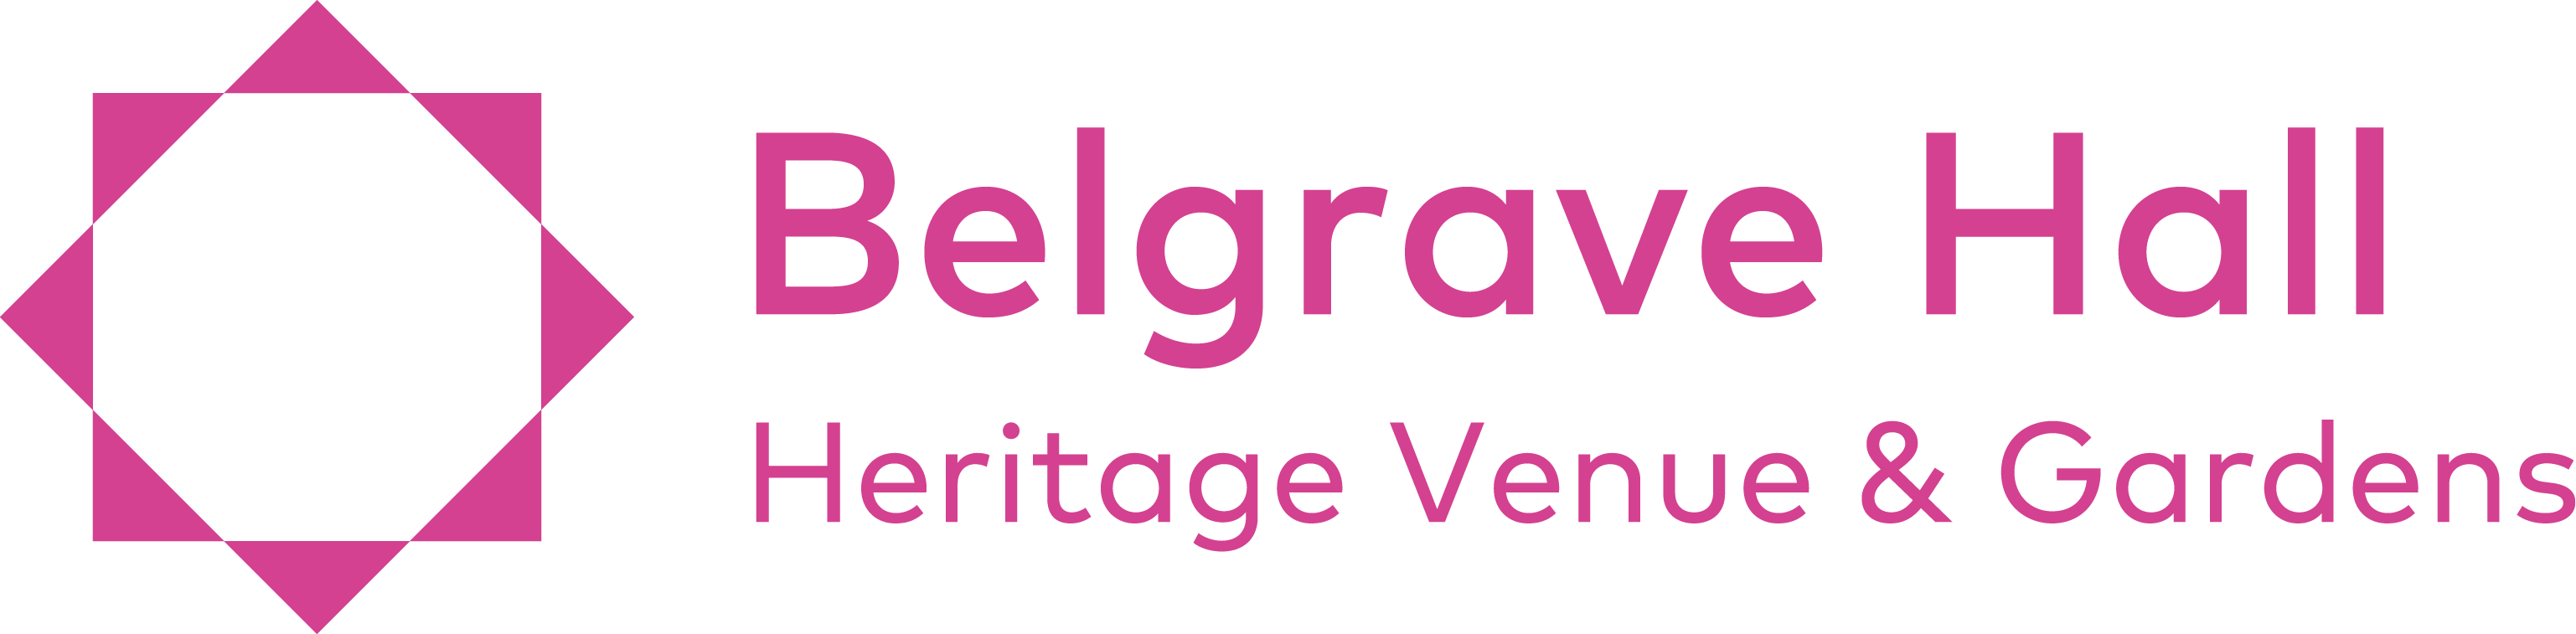 Belgrave Hall logo